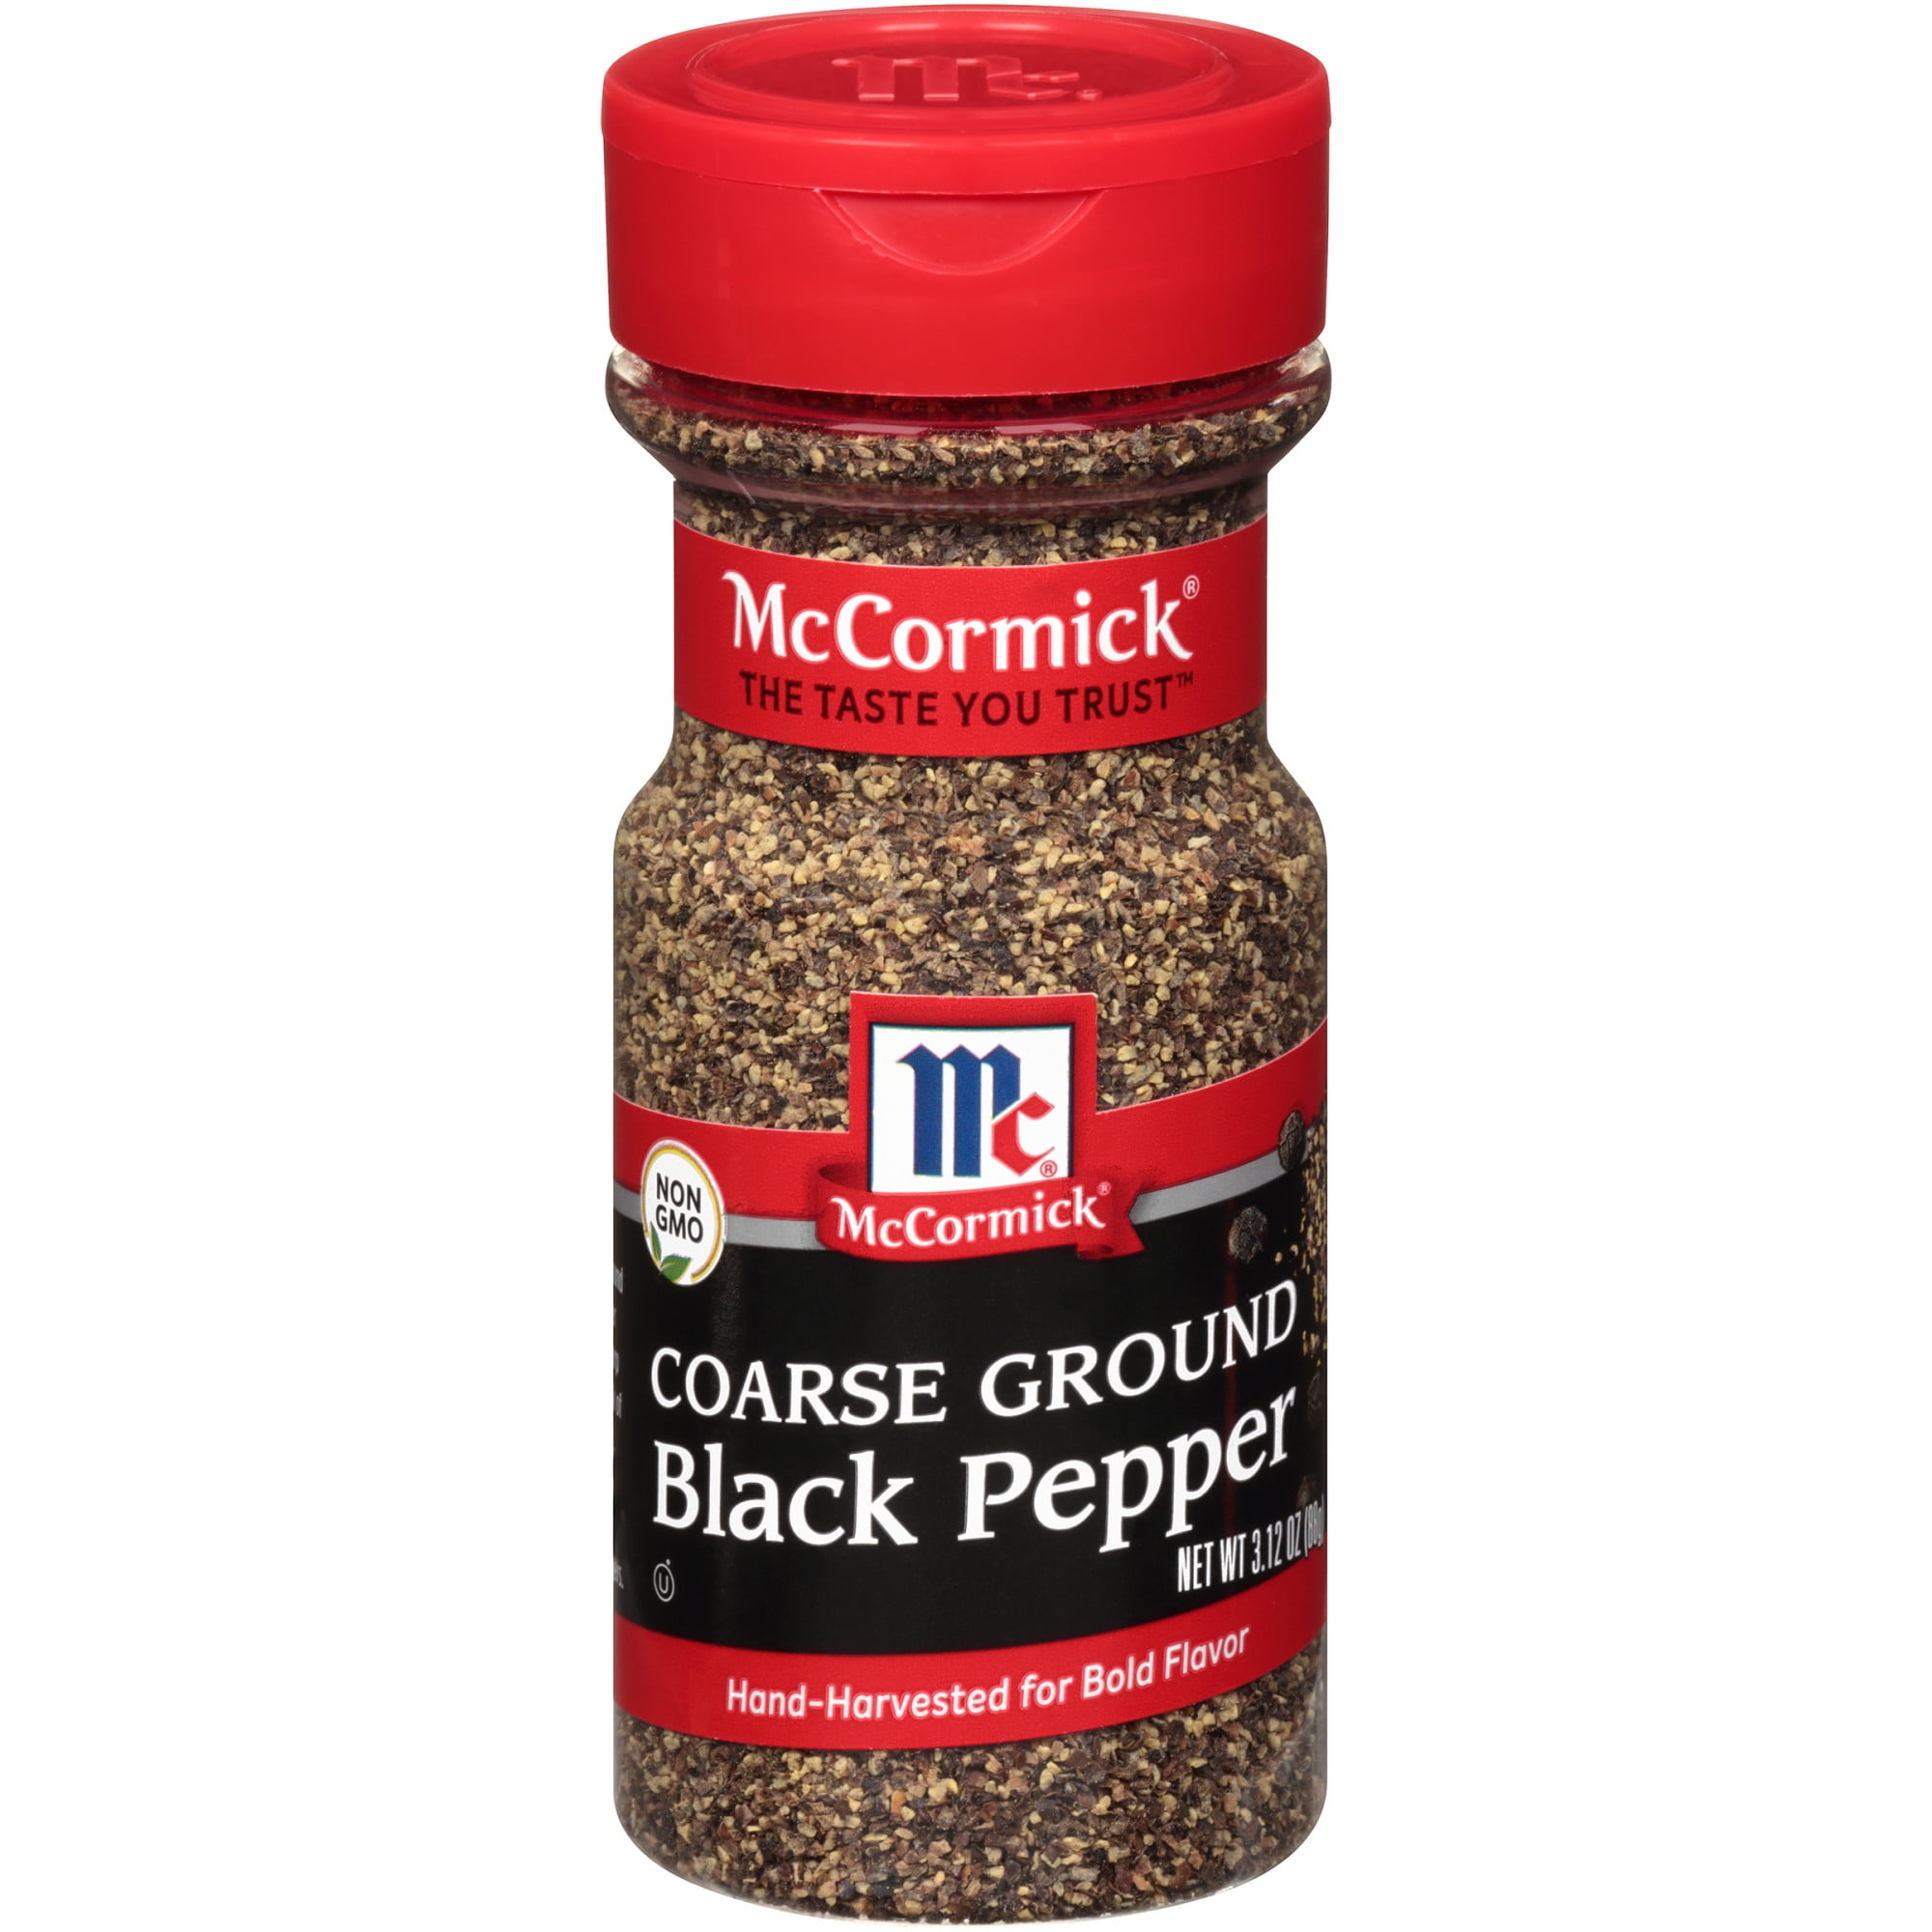 McCormick Black Pepper - Coarse Ground, 3.12 oz